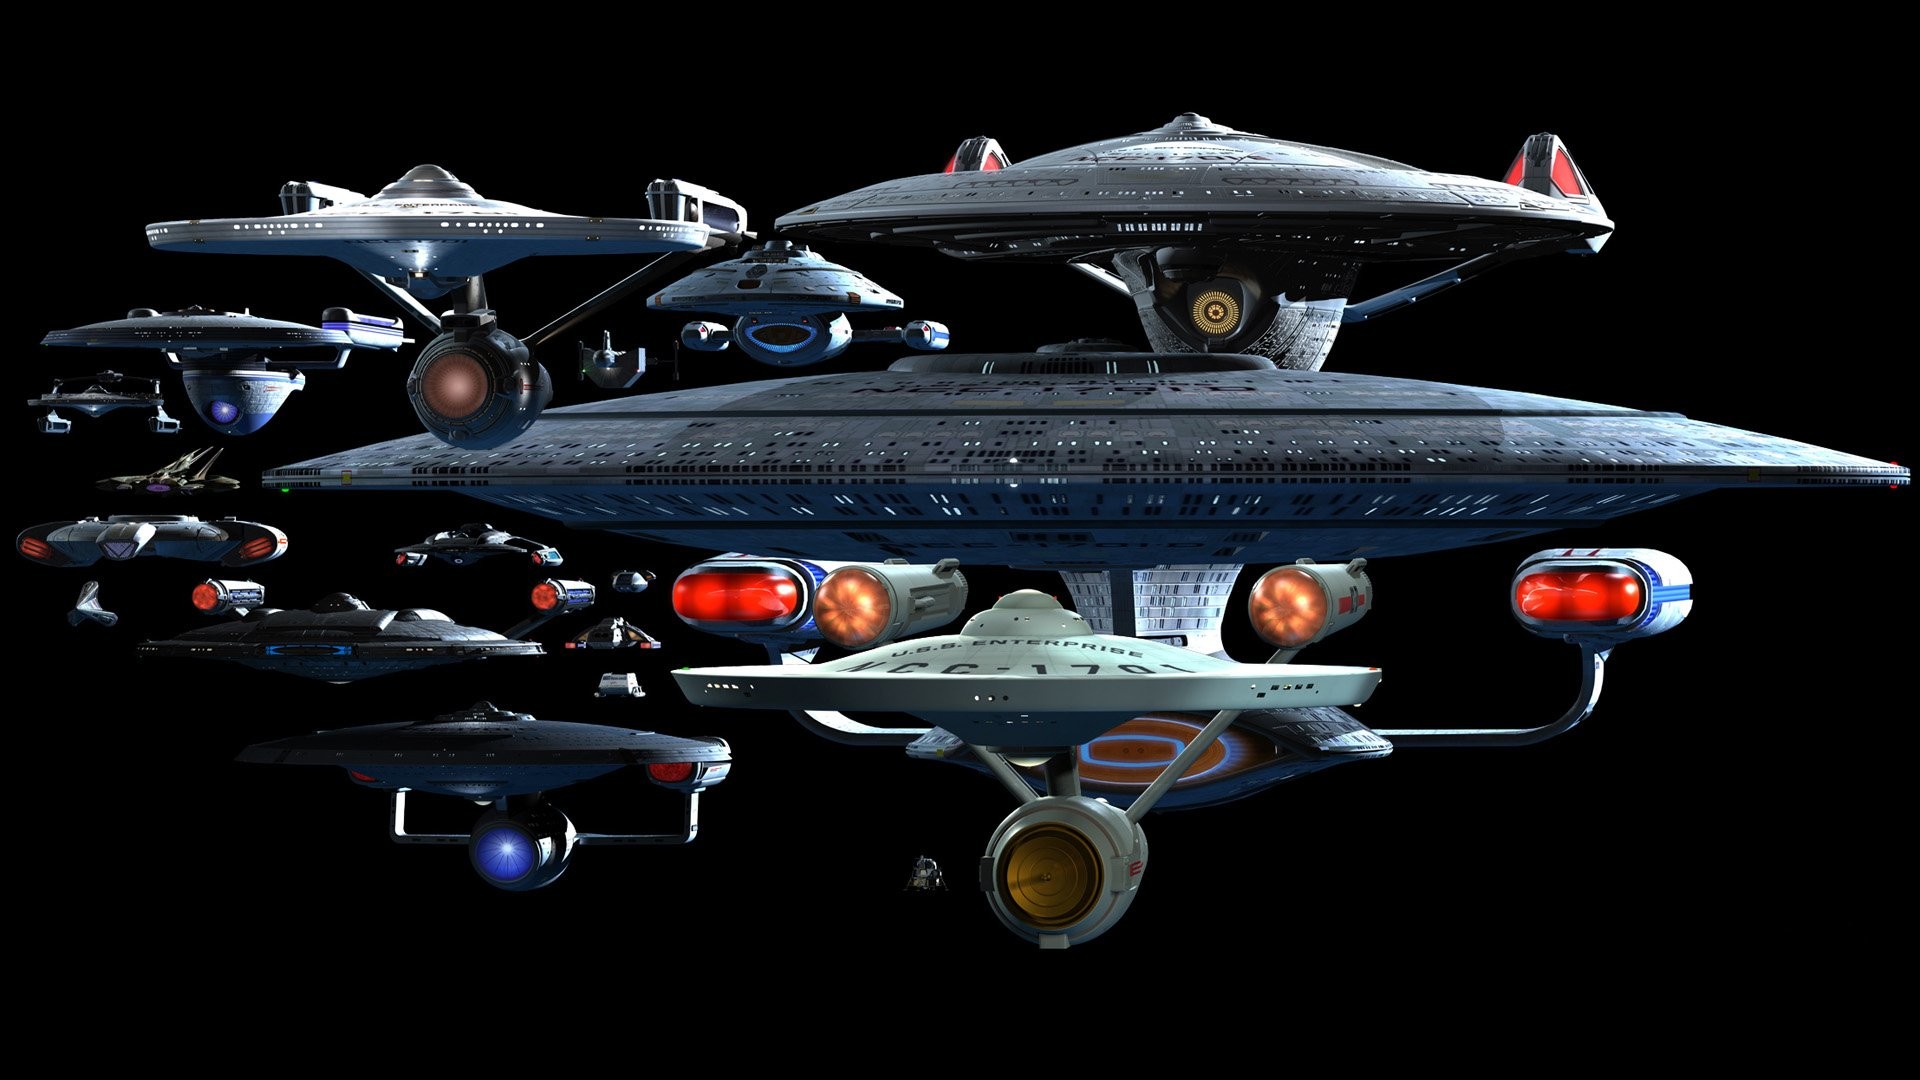 Sci Fi – Star Trek Wallpaper